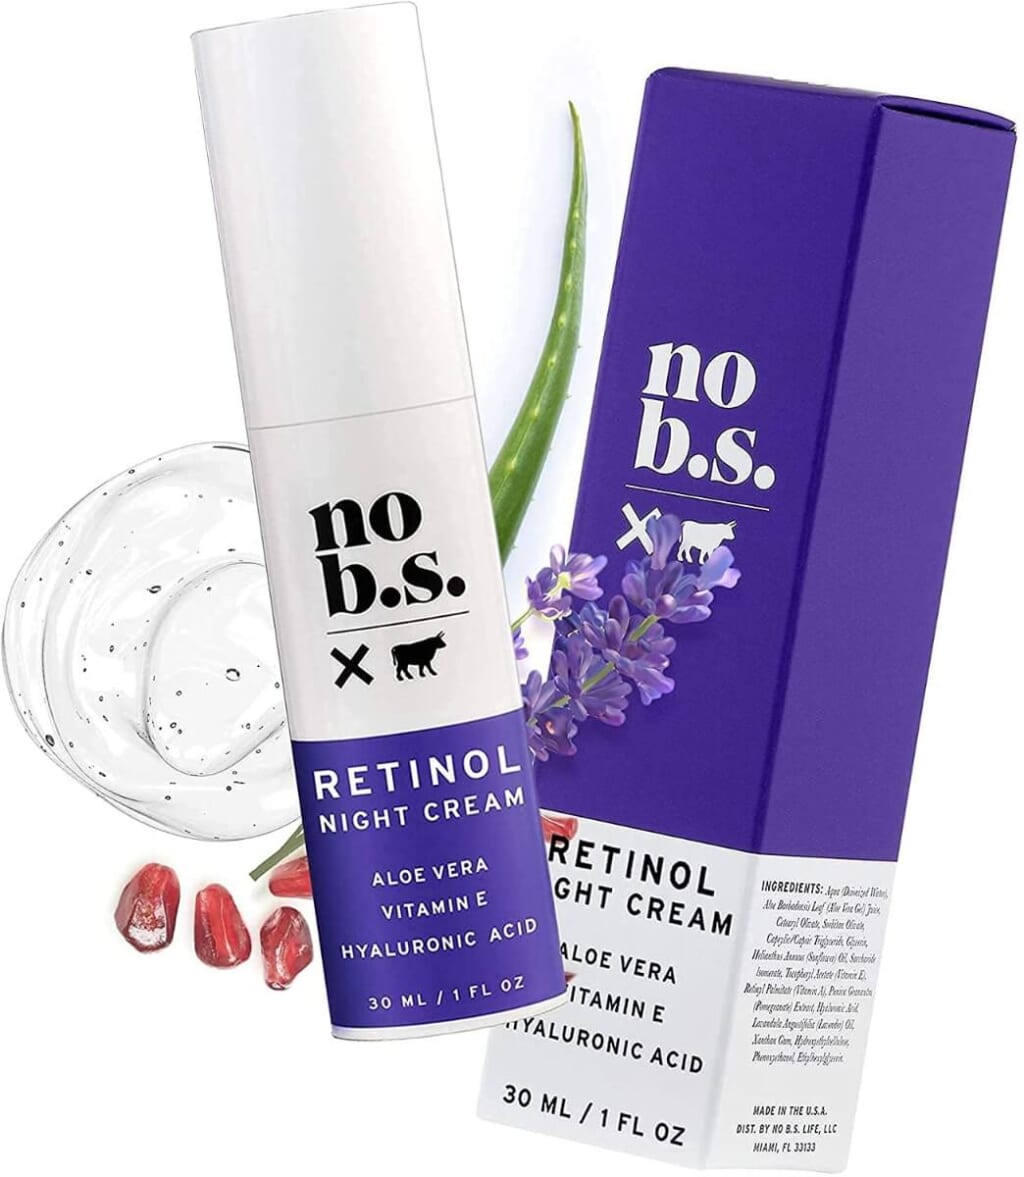 no b.s. retinol night cream product image